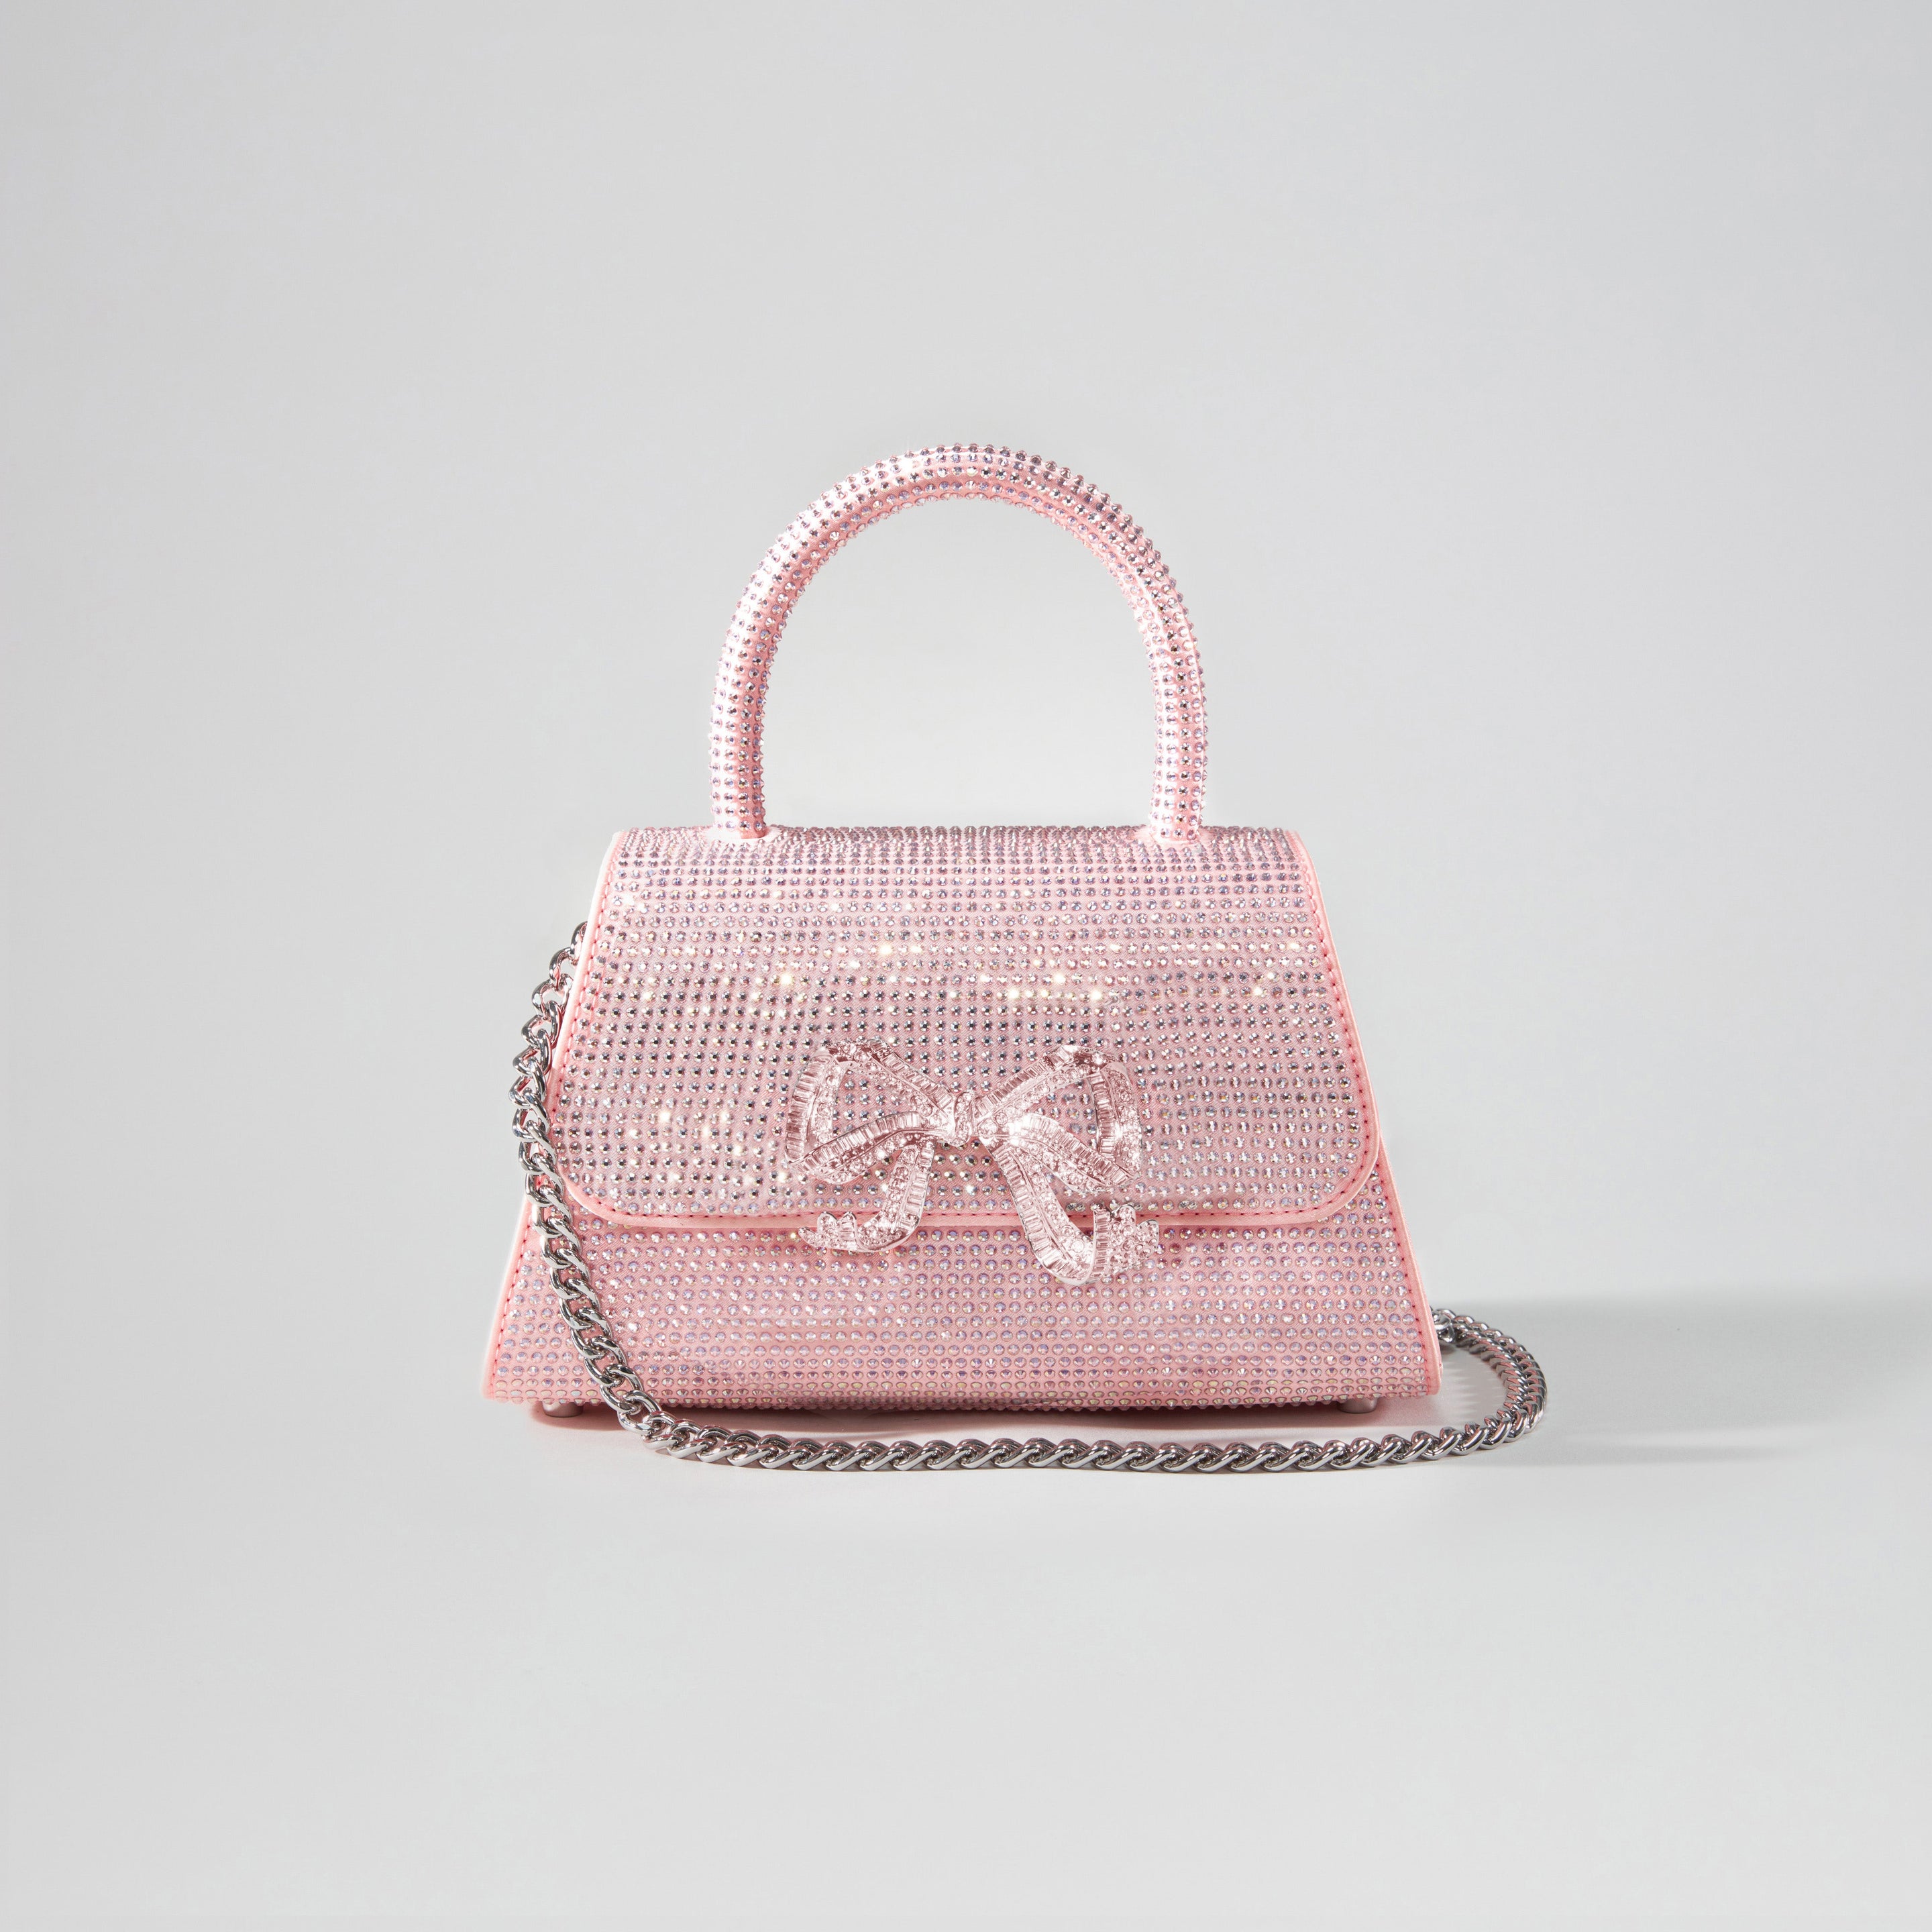 Bow & Rhinestone Decor Bag Design Bag Charm Fashionable